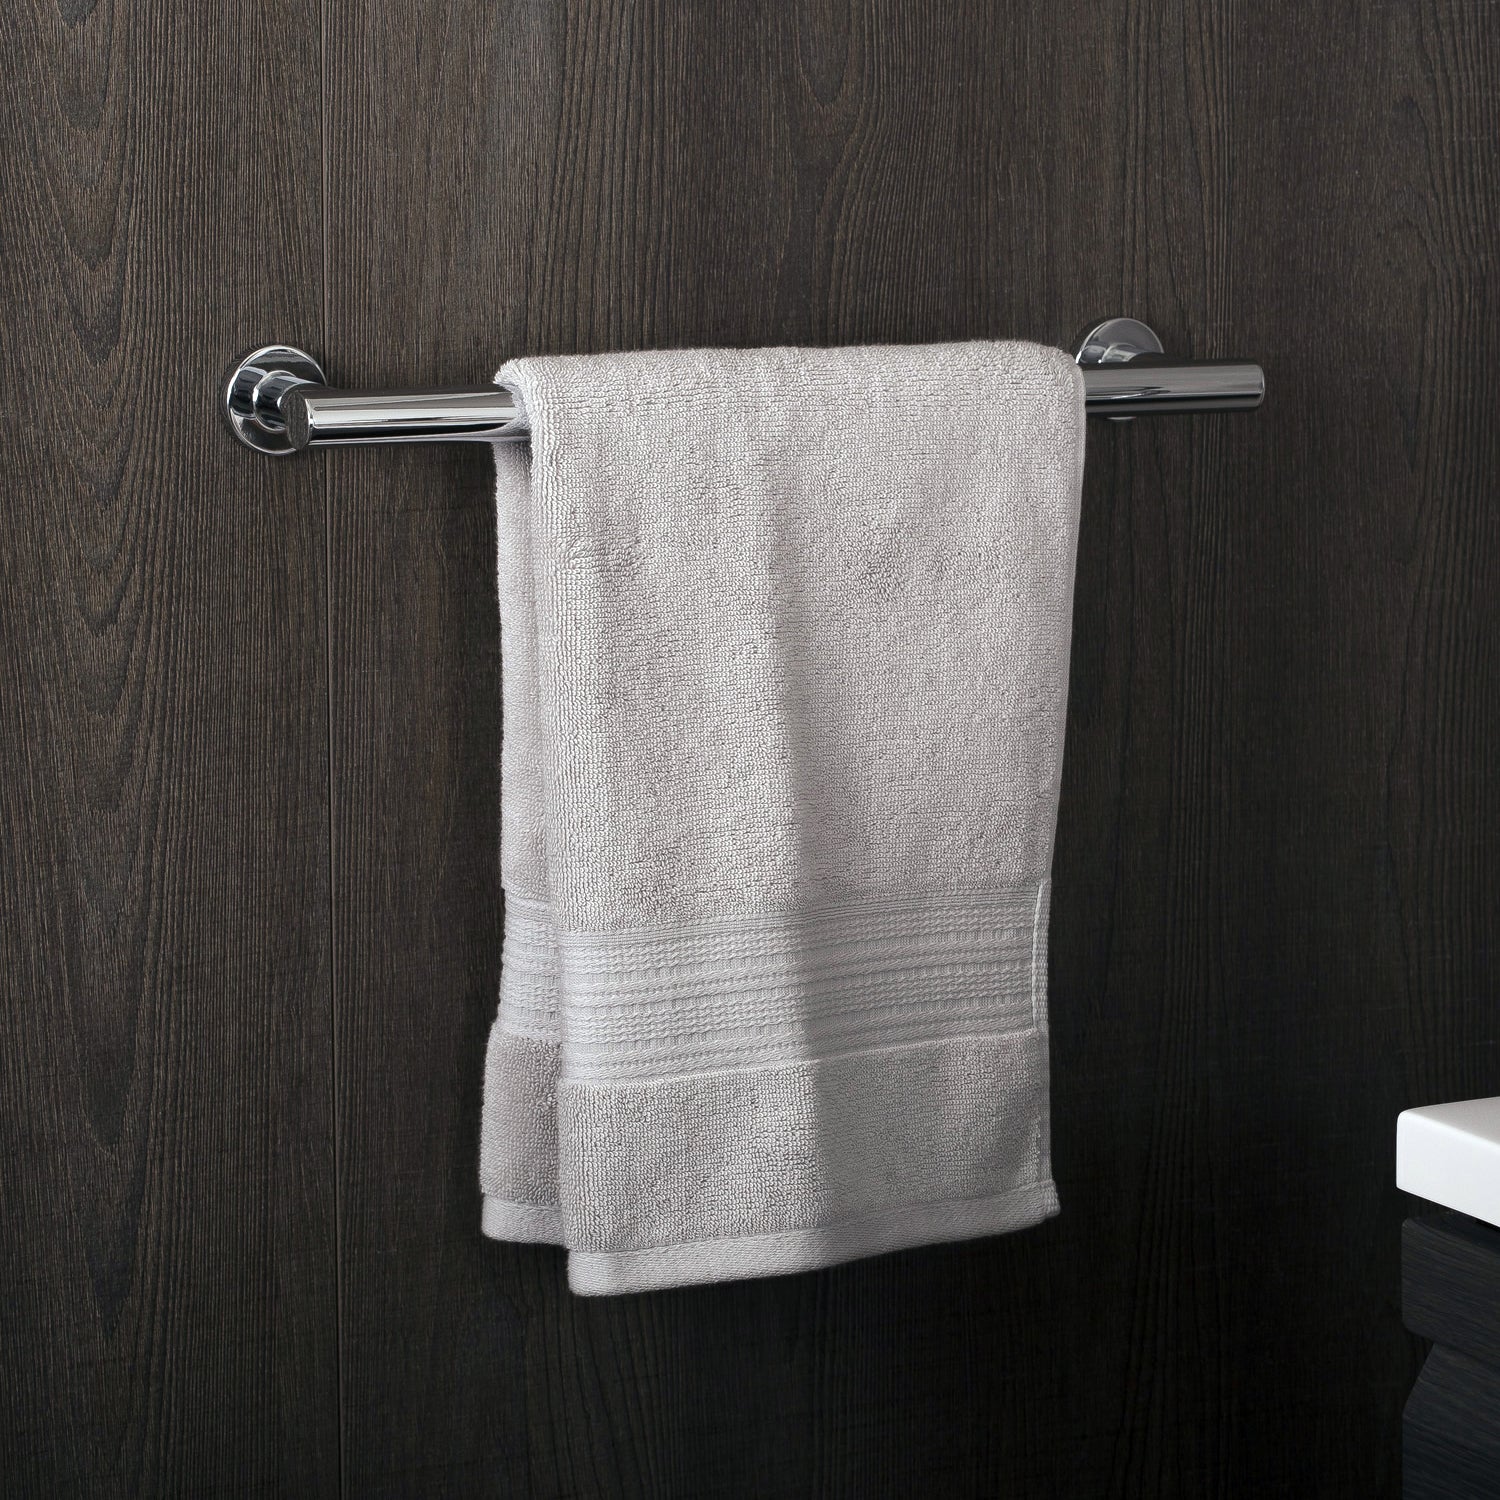 COSMIC Architect Single Towel Bar, Wall Mount, Brass Body, Chrome Finish, 16-5/16 x 1-11/16 x 3-1/4 Inches (2050164)